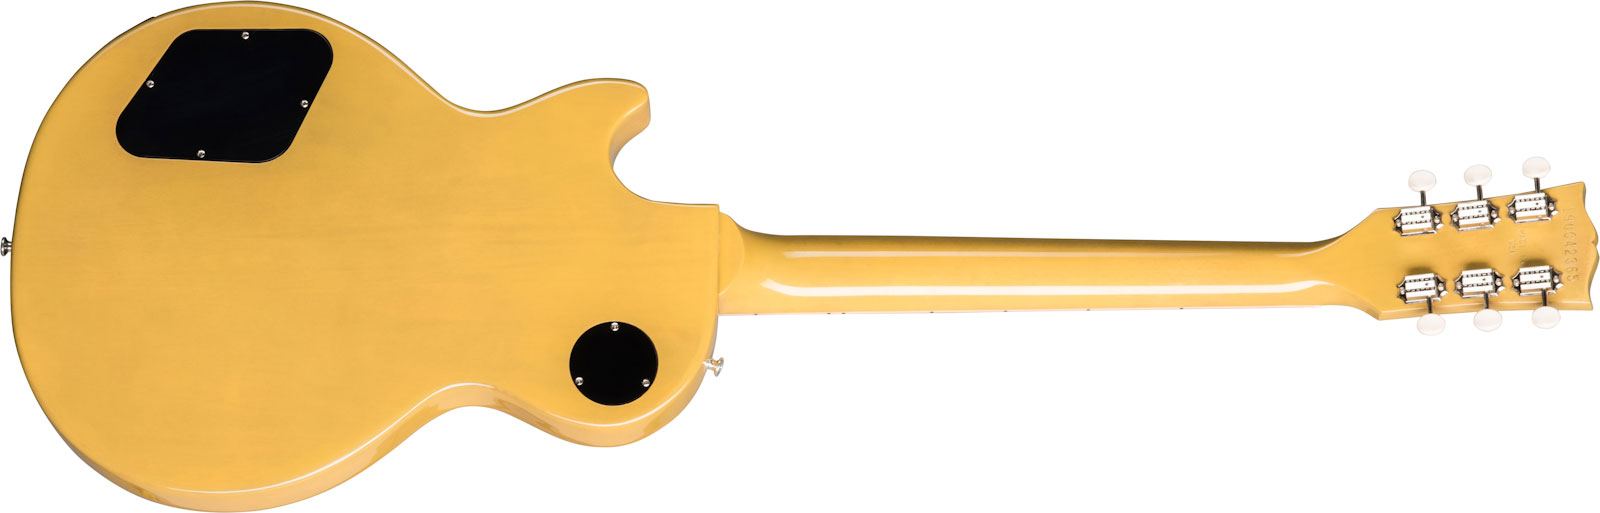 Gibson Les Paul Special Lh Original Gaucher 2p90 Ht Rw - Tv Yellow - Guitarra electrica para zurdos - Variation 1